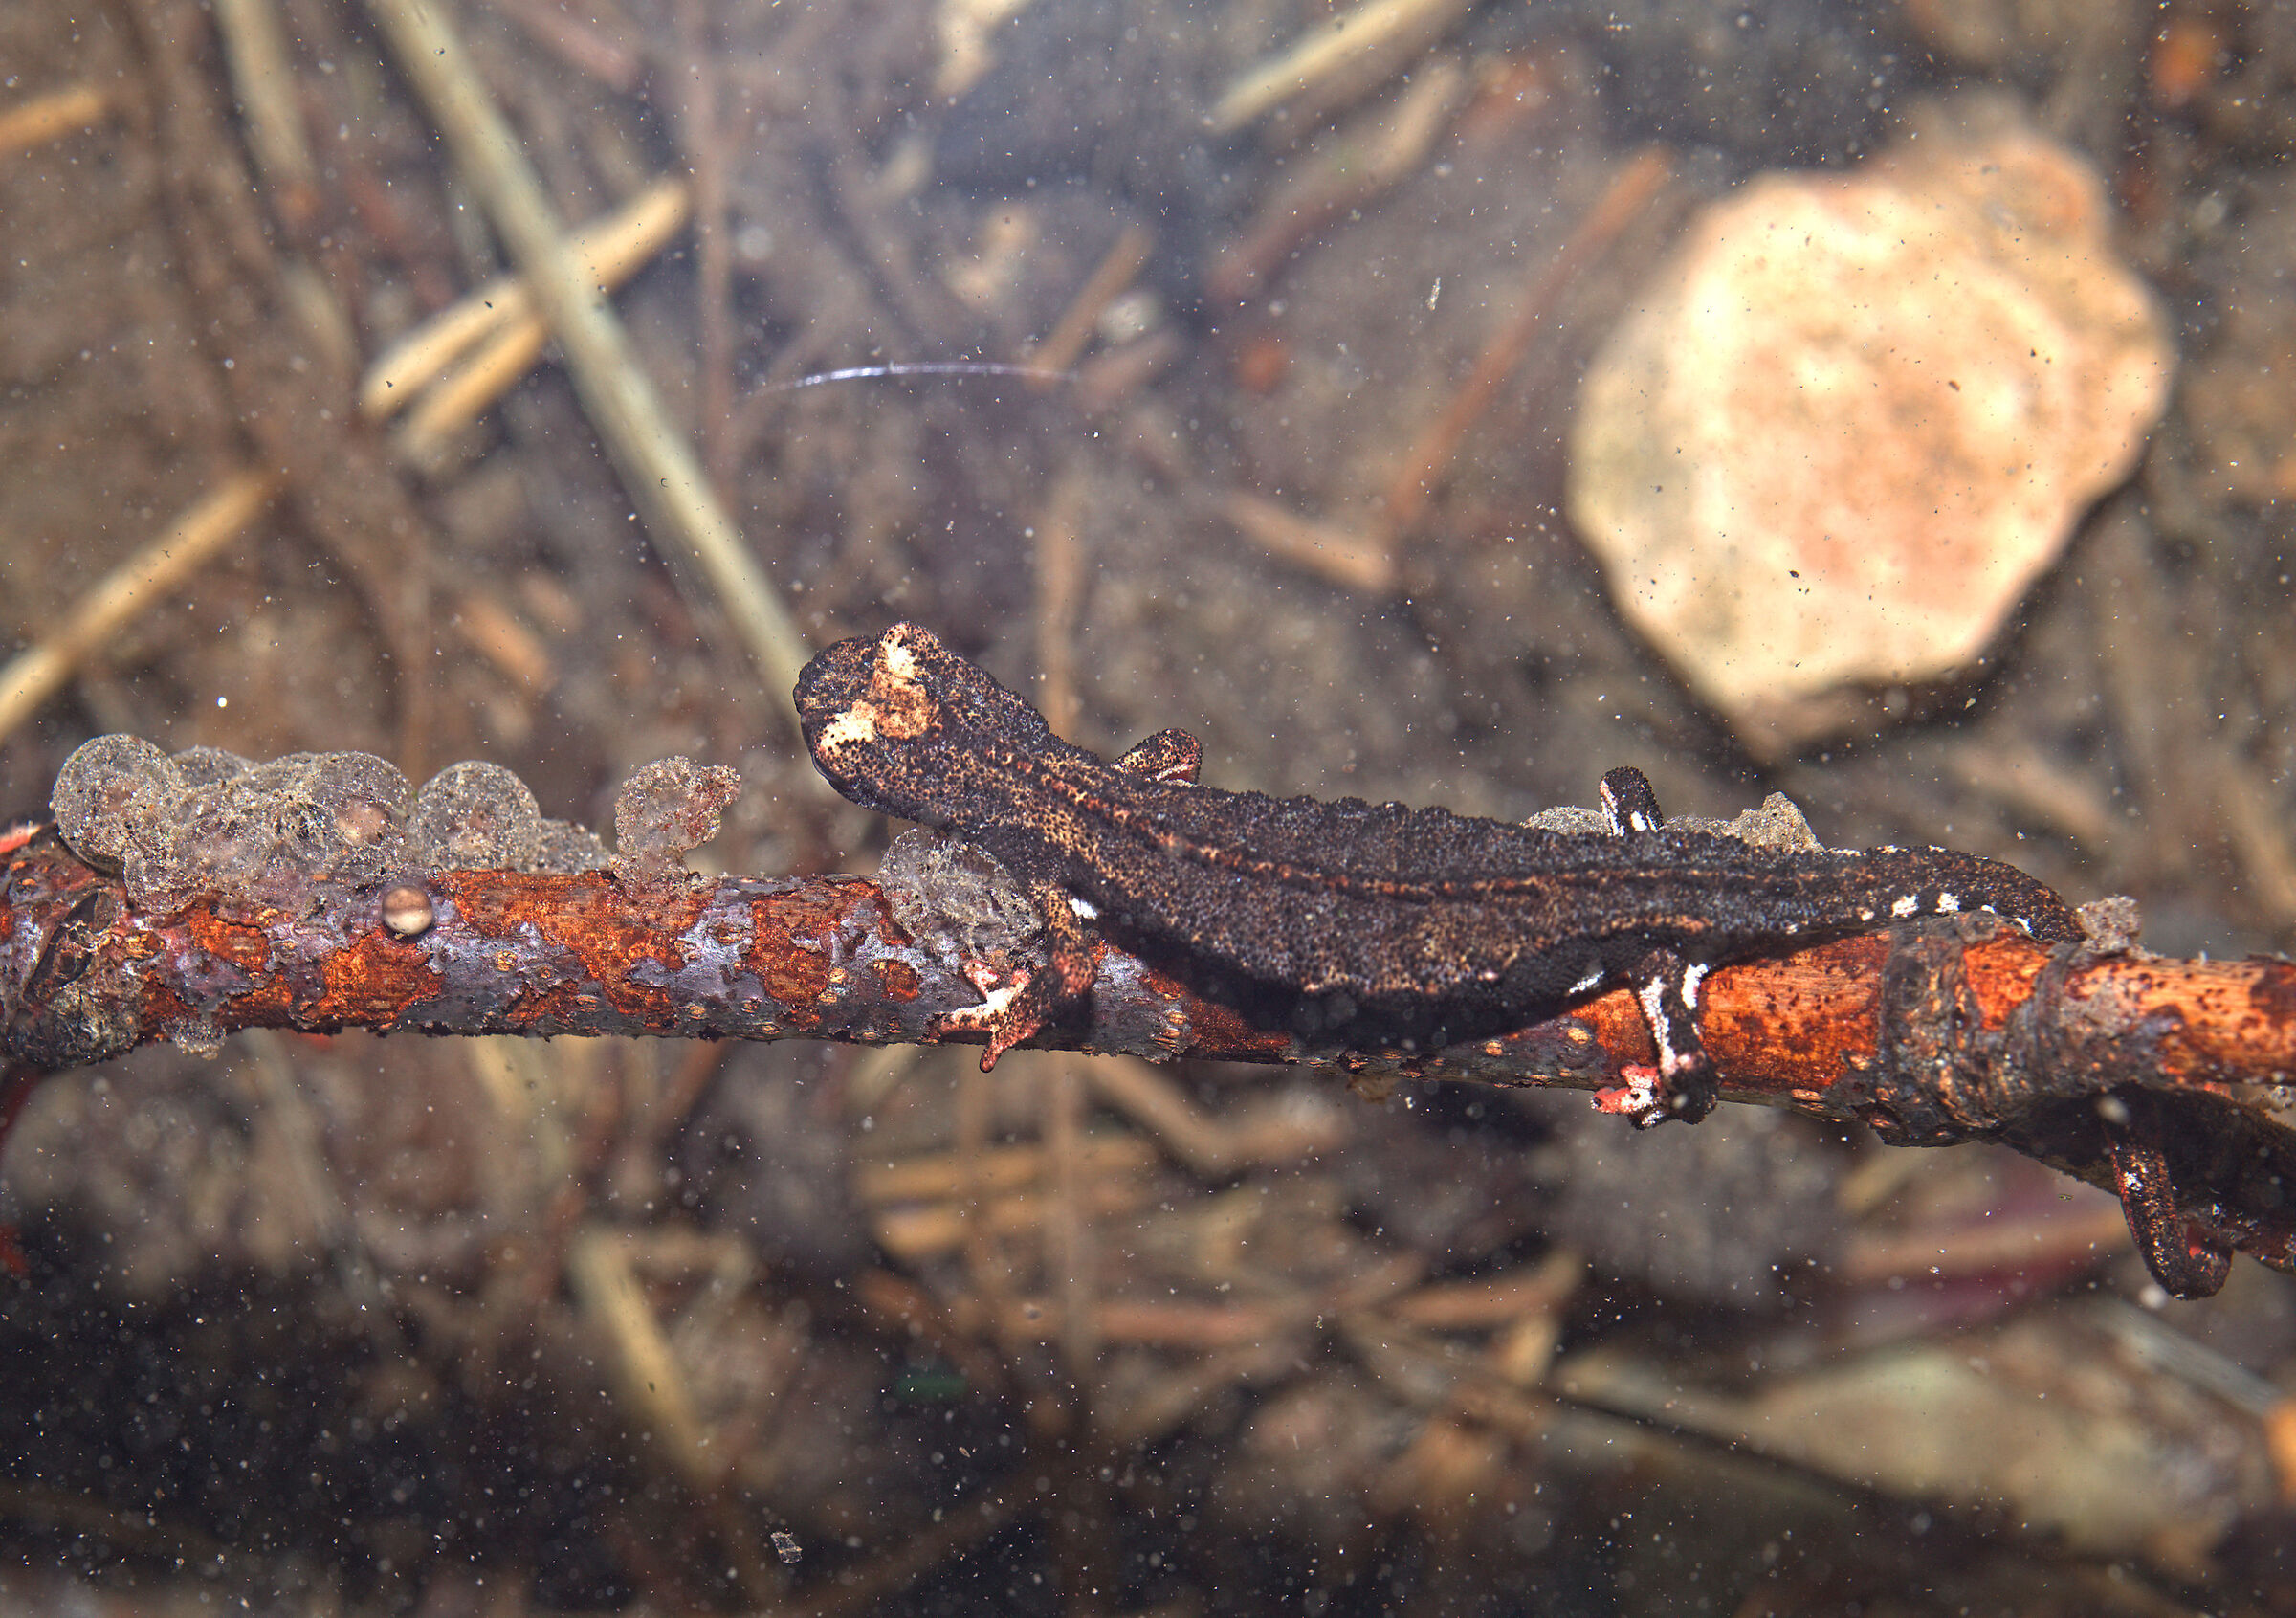 Spectacled salamander ...